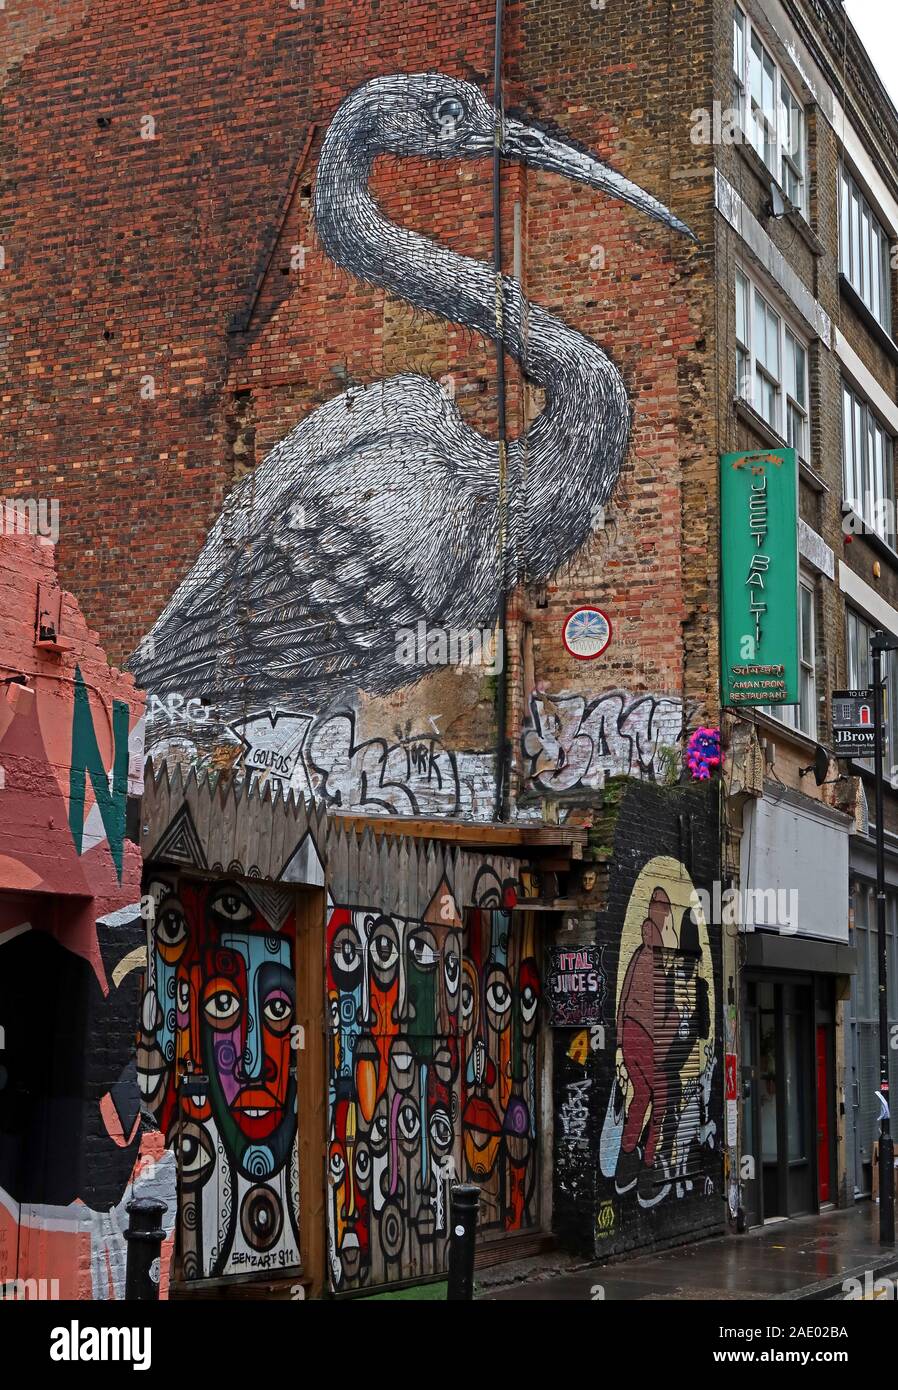 Stork on Wall, Brick Lane, Kunst und Graffiti, Shoreditch, Tower Hamlets, East End, London, South East, England, Großbritannien, E1 6QL Stockfoto